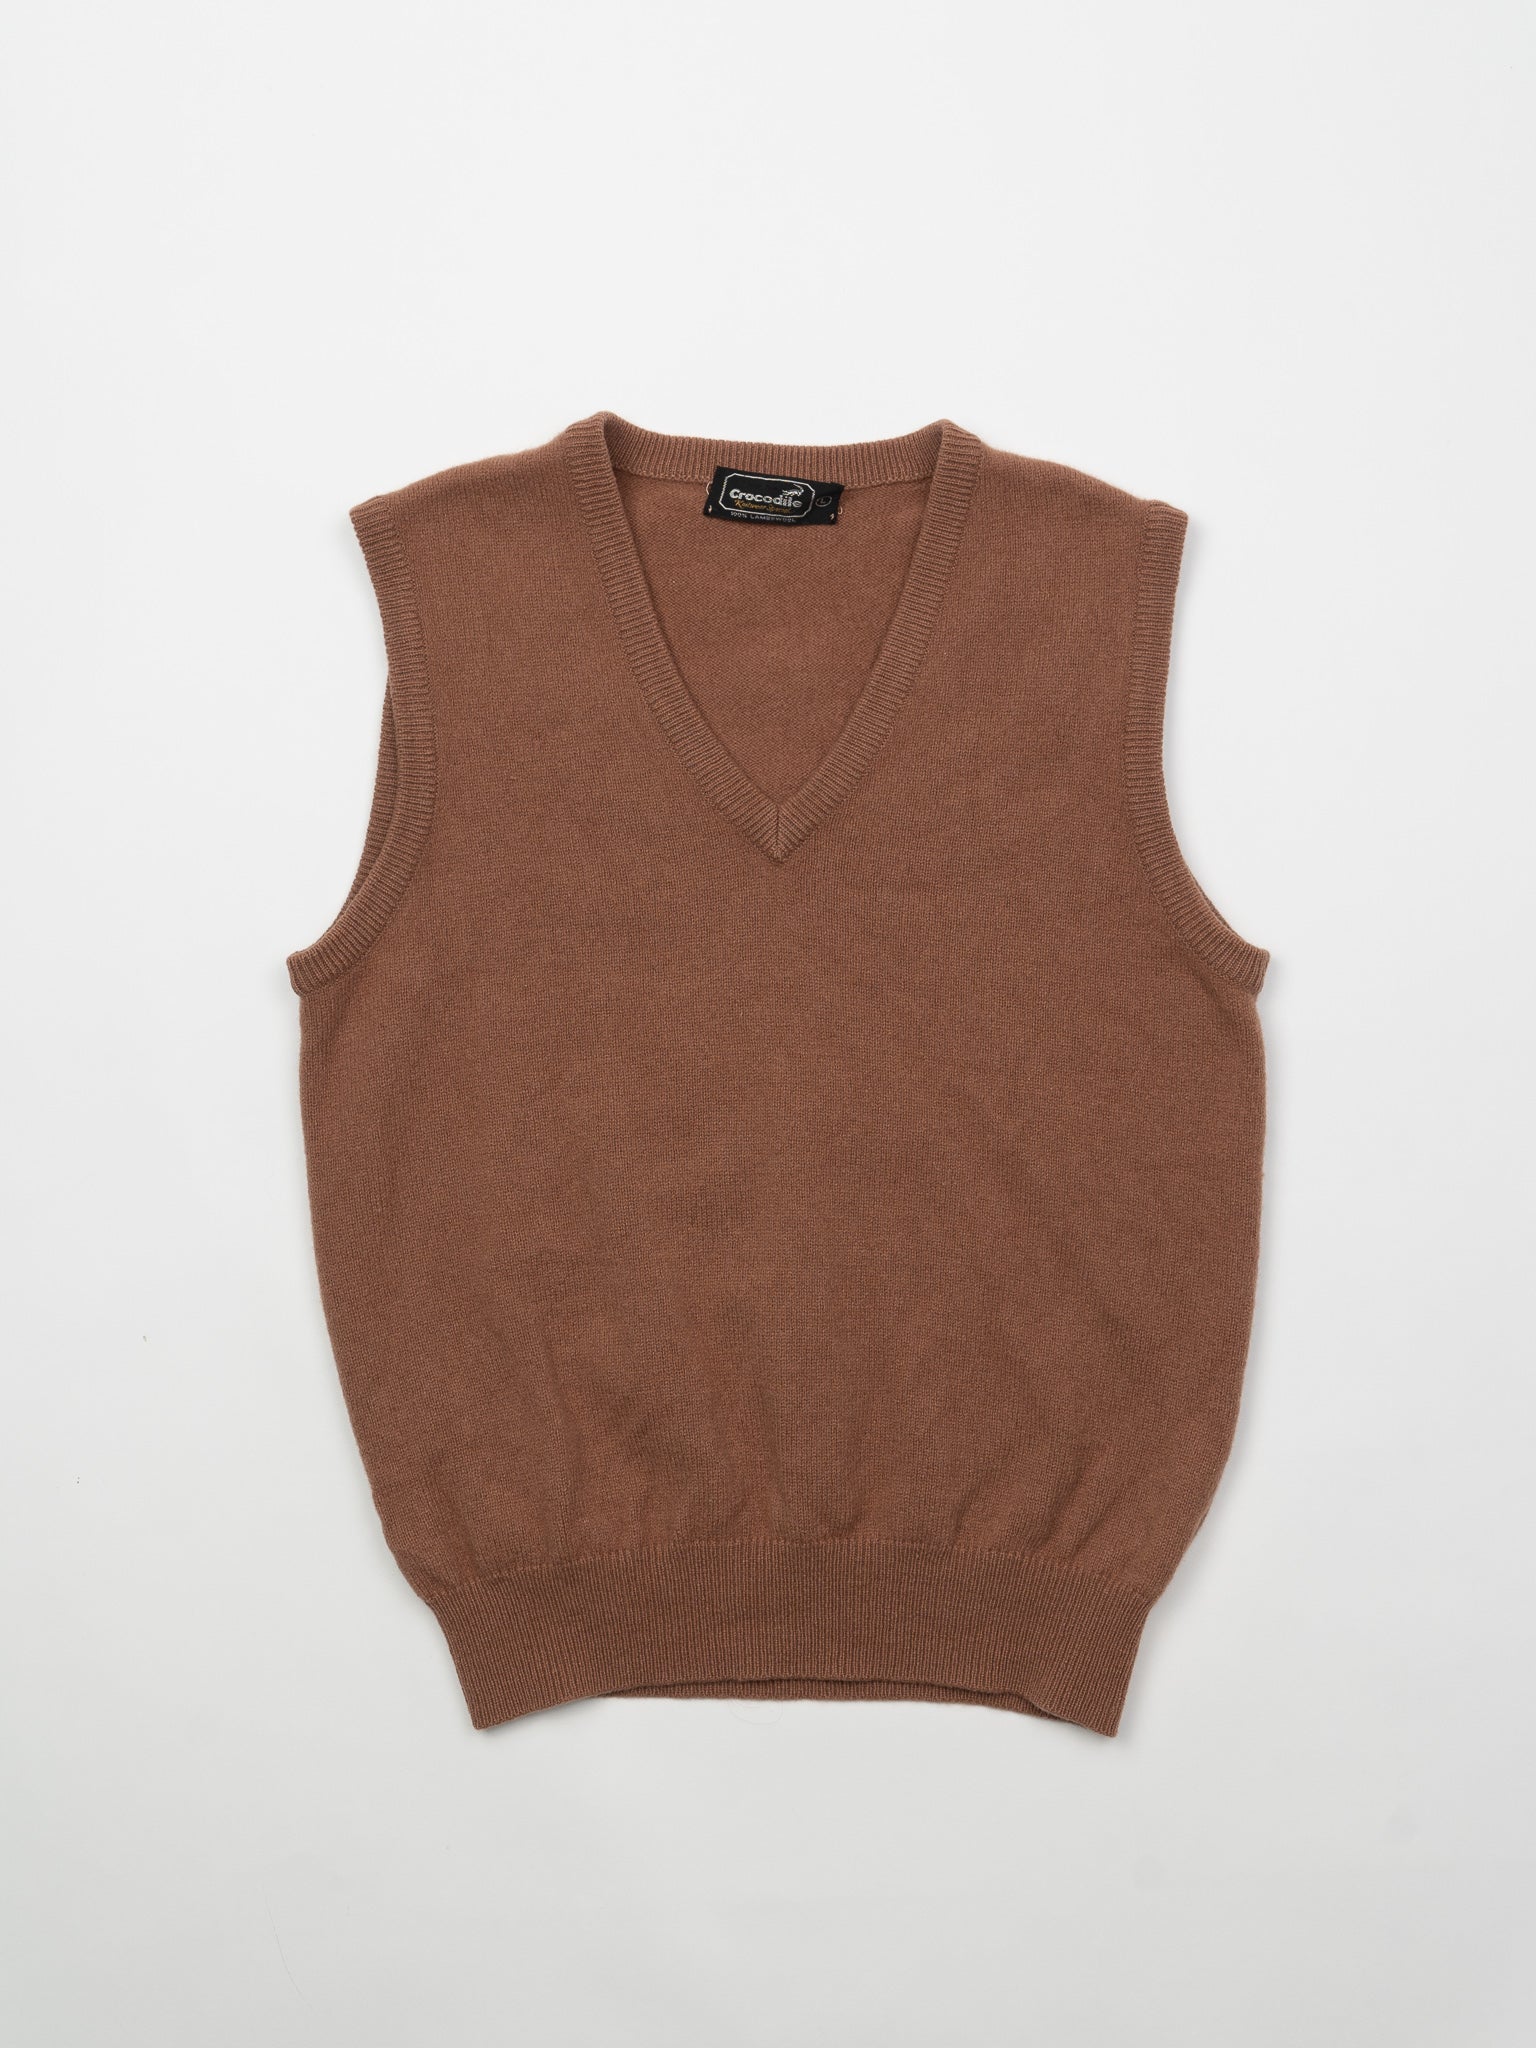 Vintage 70s Light Brown Lambs Wool Sweater Vest (M)